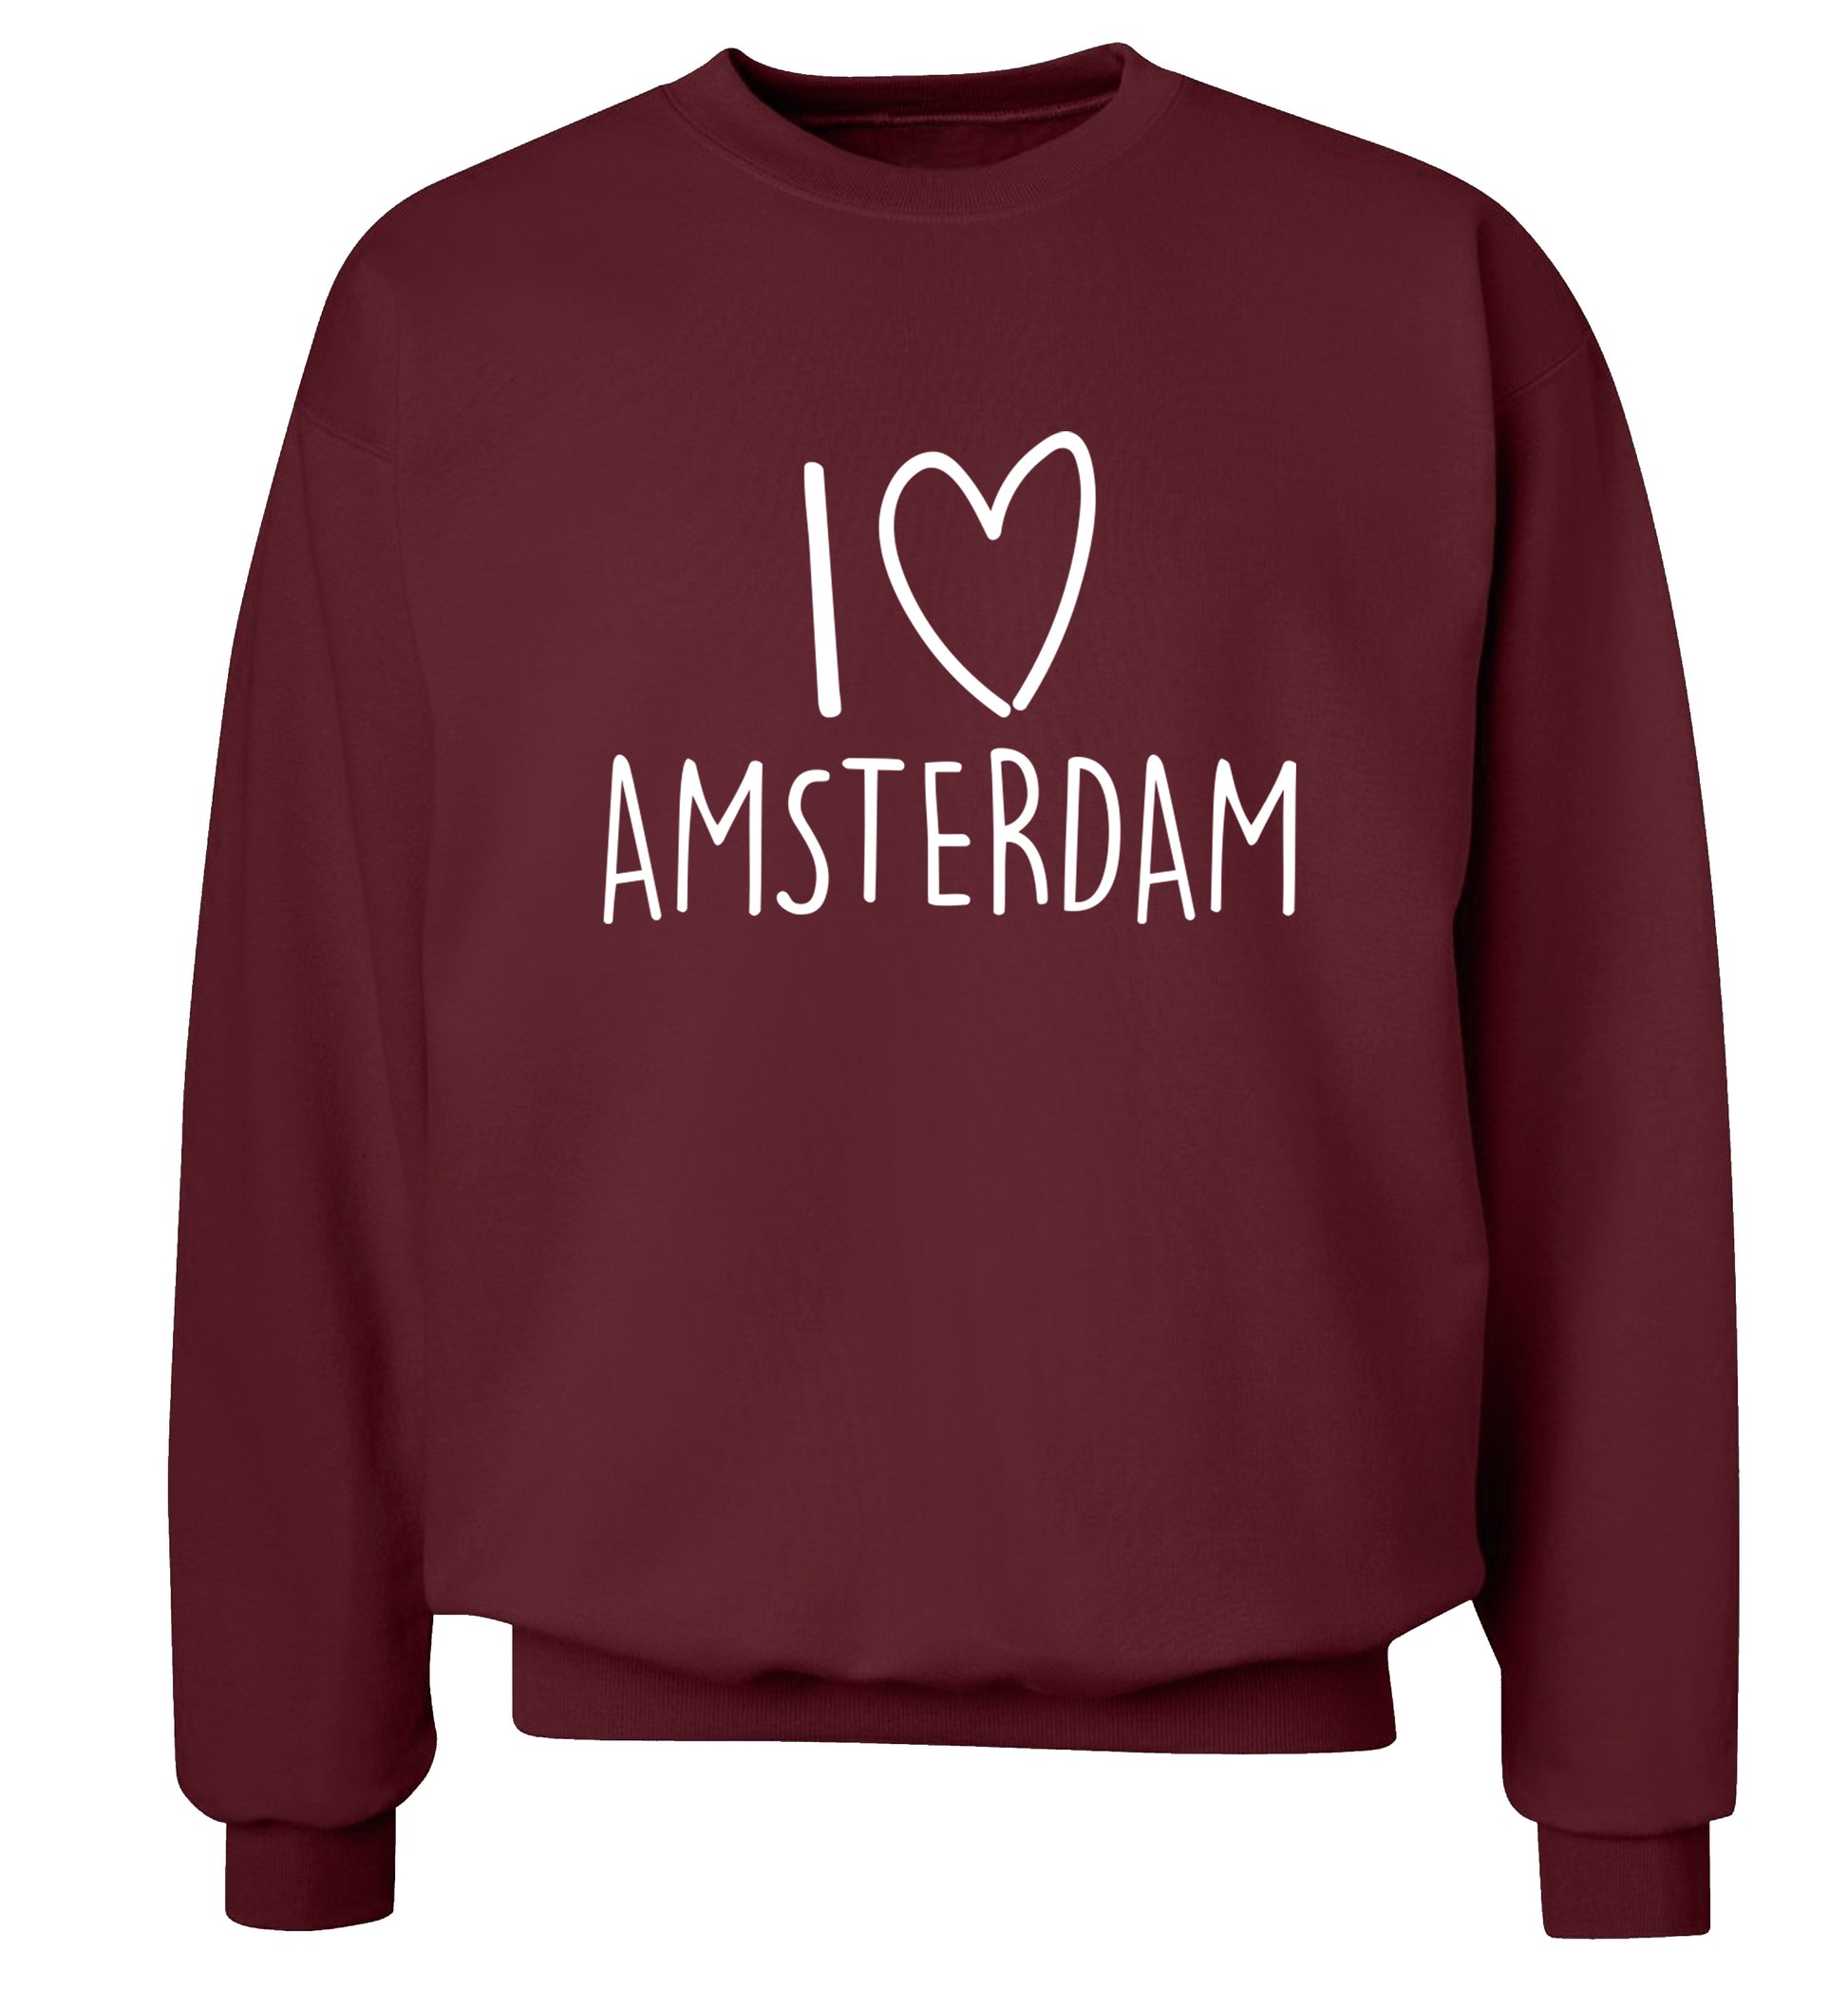 I love Amsterdam Adult's unisex maroon Sweater 2XL